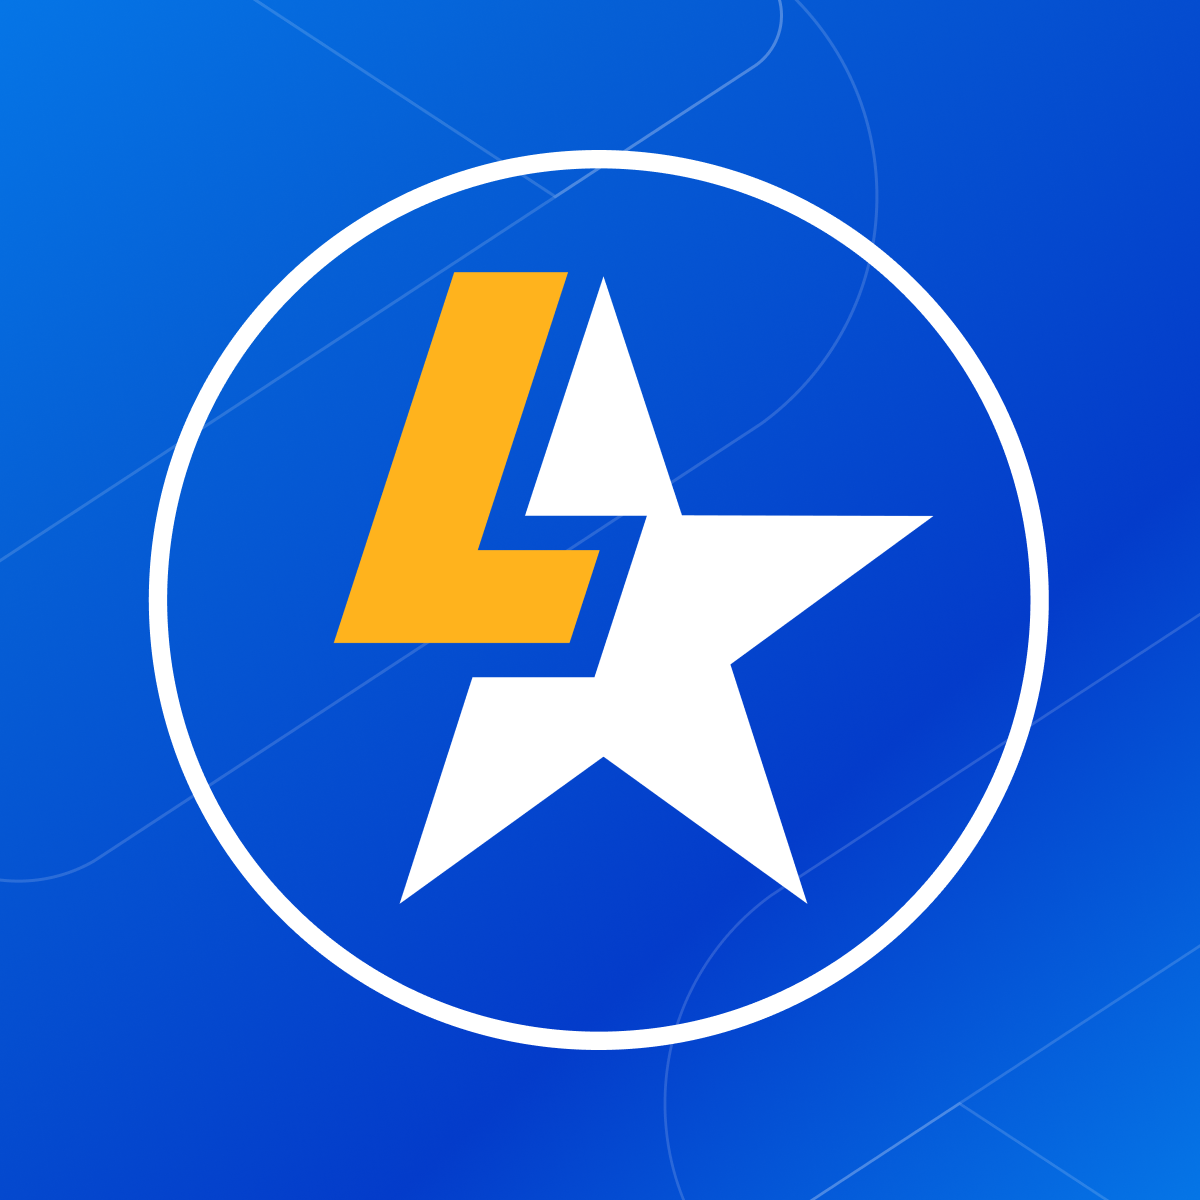 LAI Product Amazon Reviews Shopify App